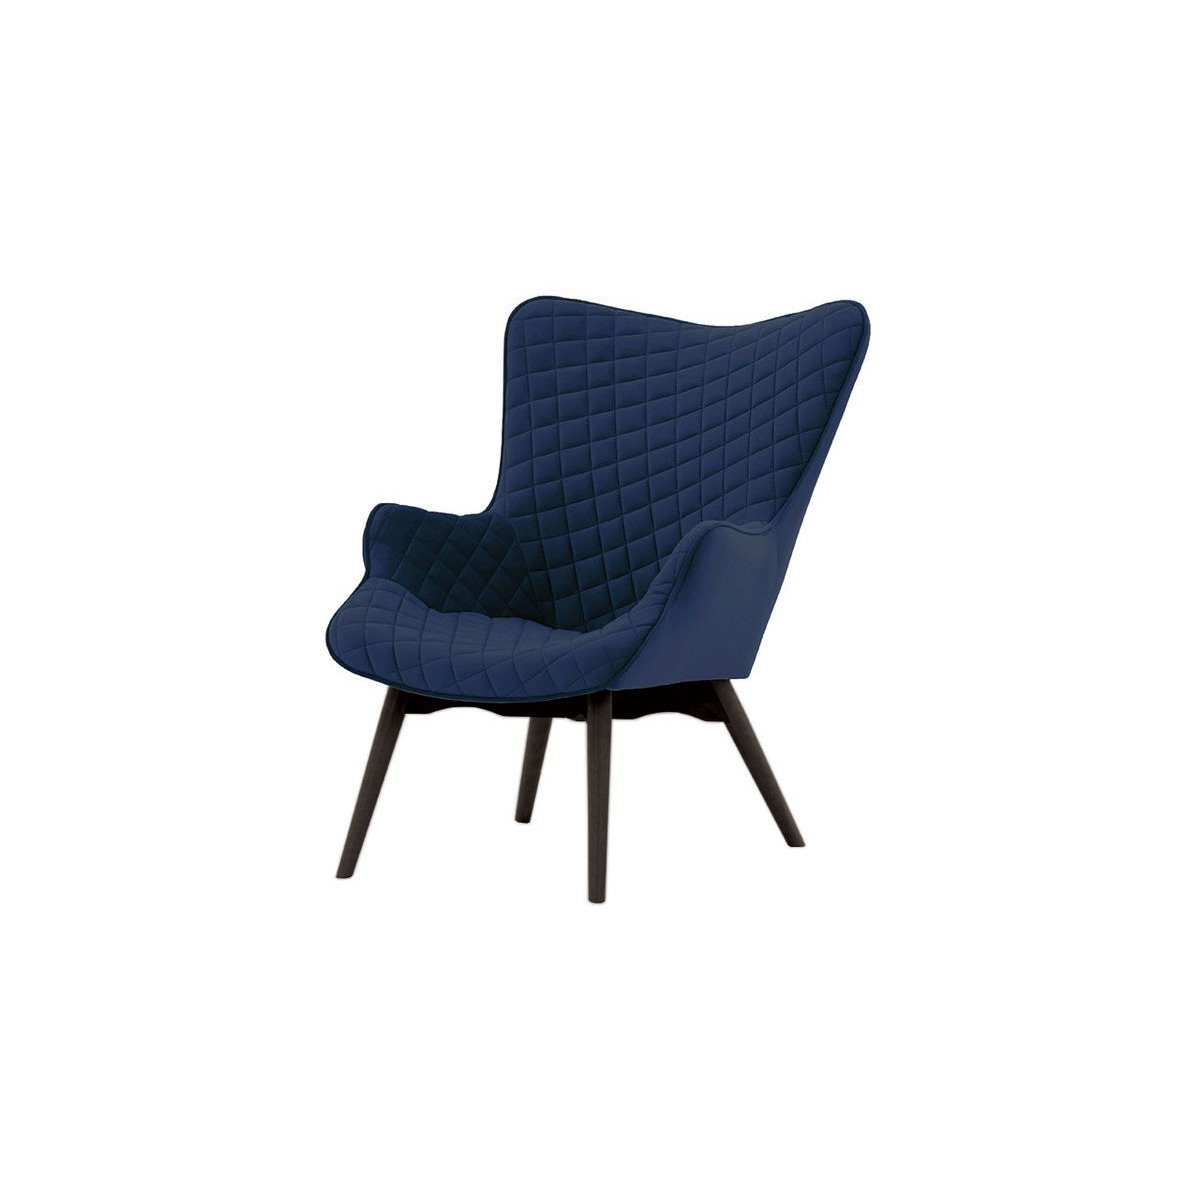 Ducon Velvet Wingback Chair With Stitching, blue, Leg colour: black - image 1